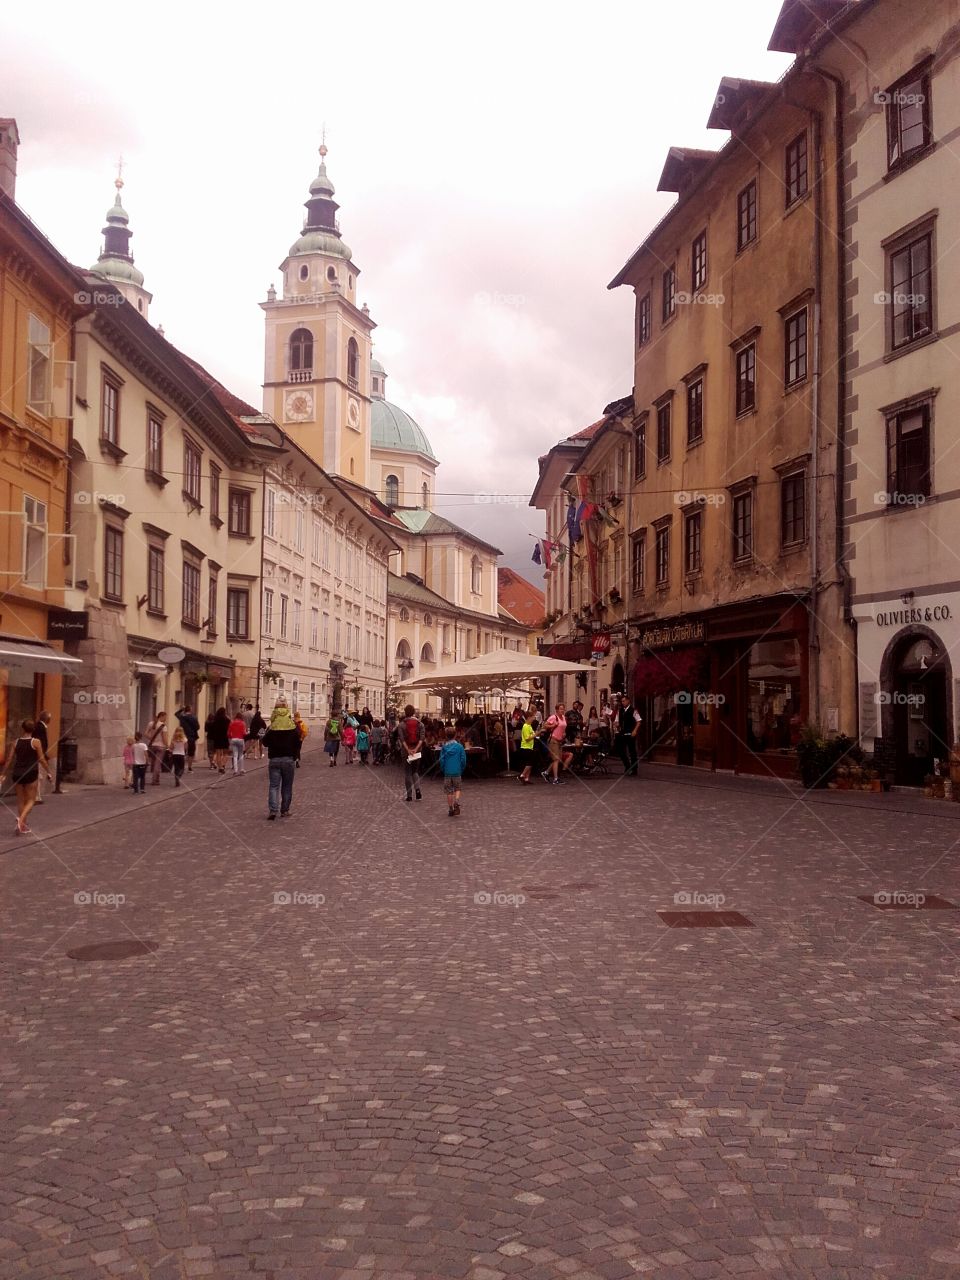 The streets of Ljubljana